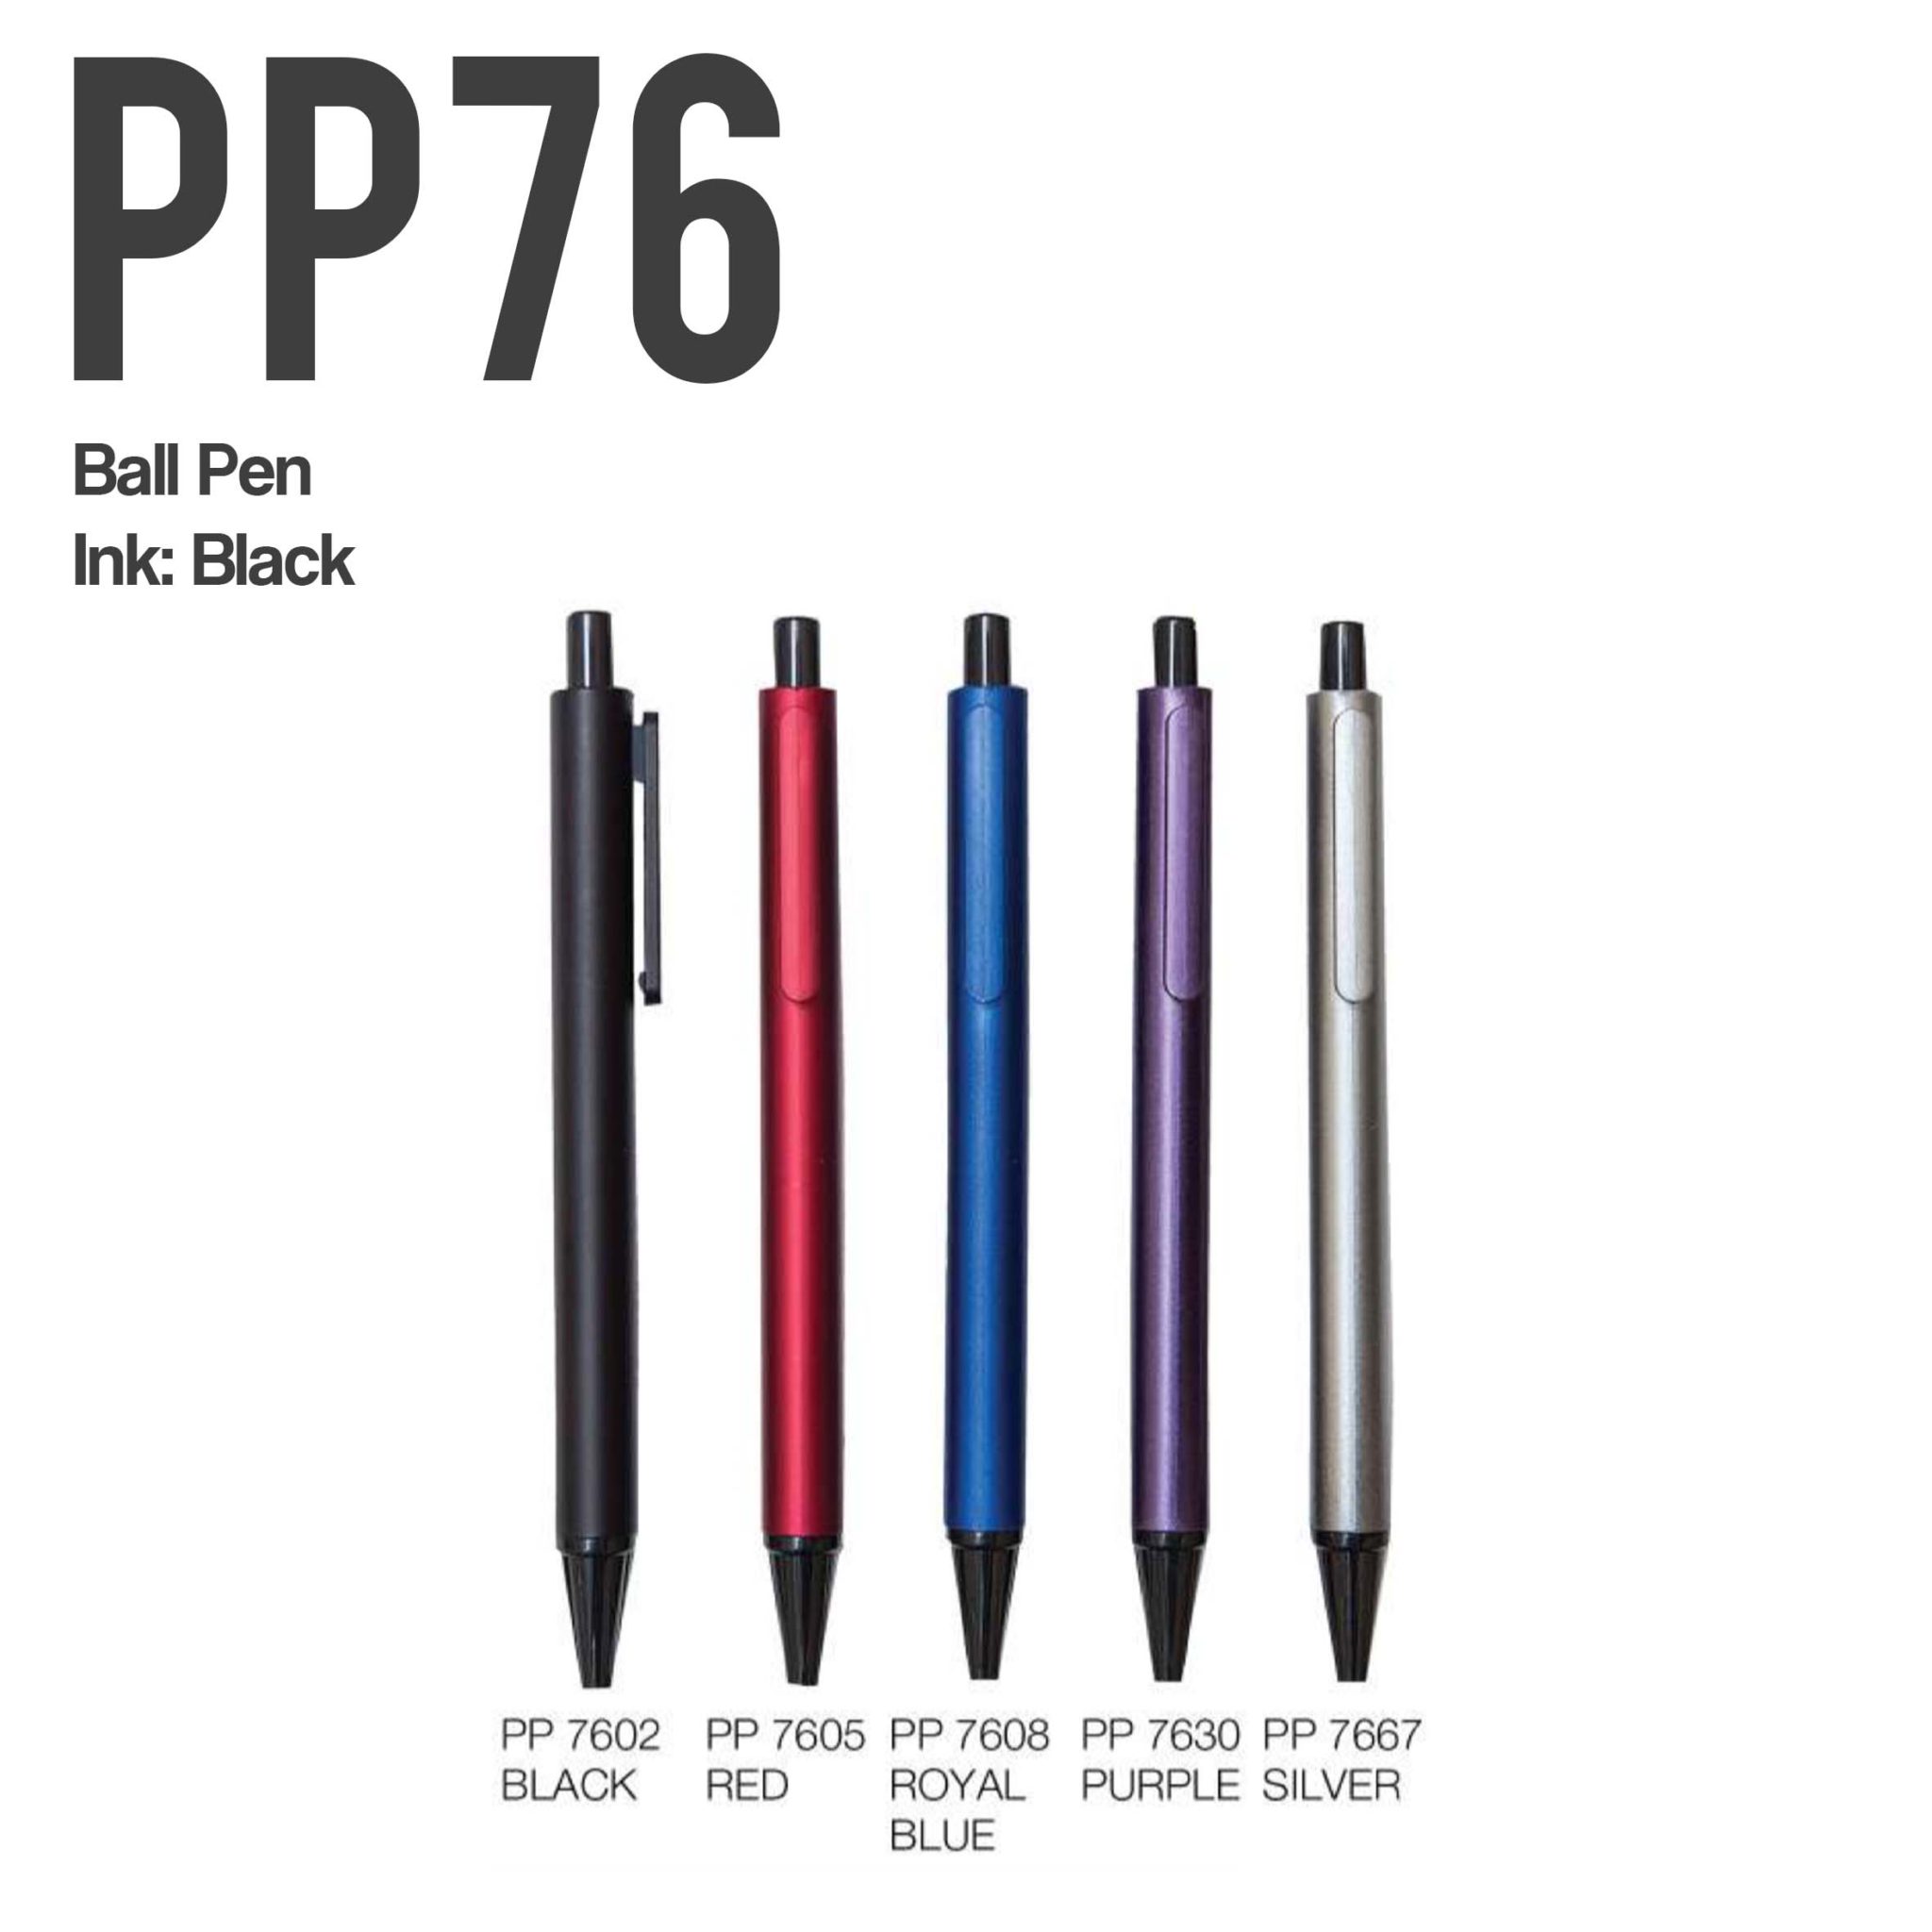 PP74 plastic pen scaled